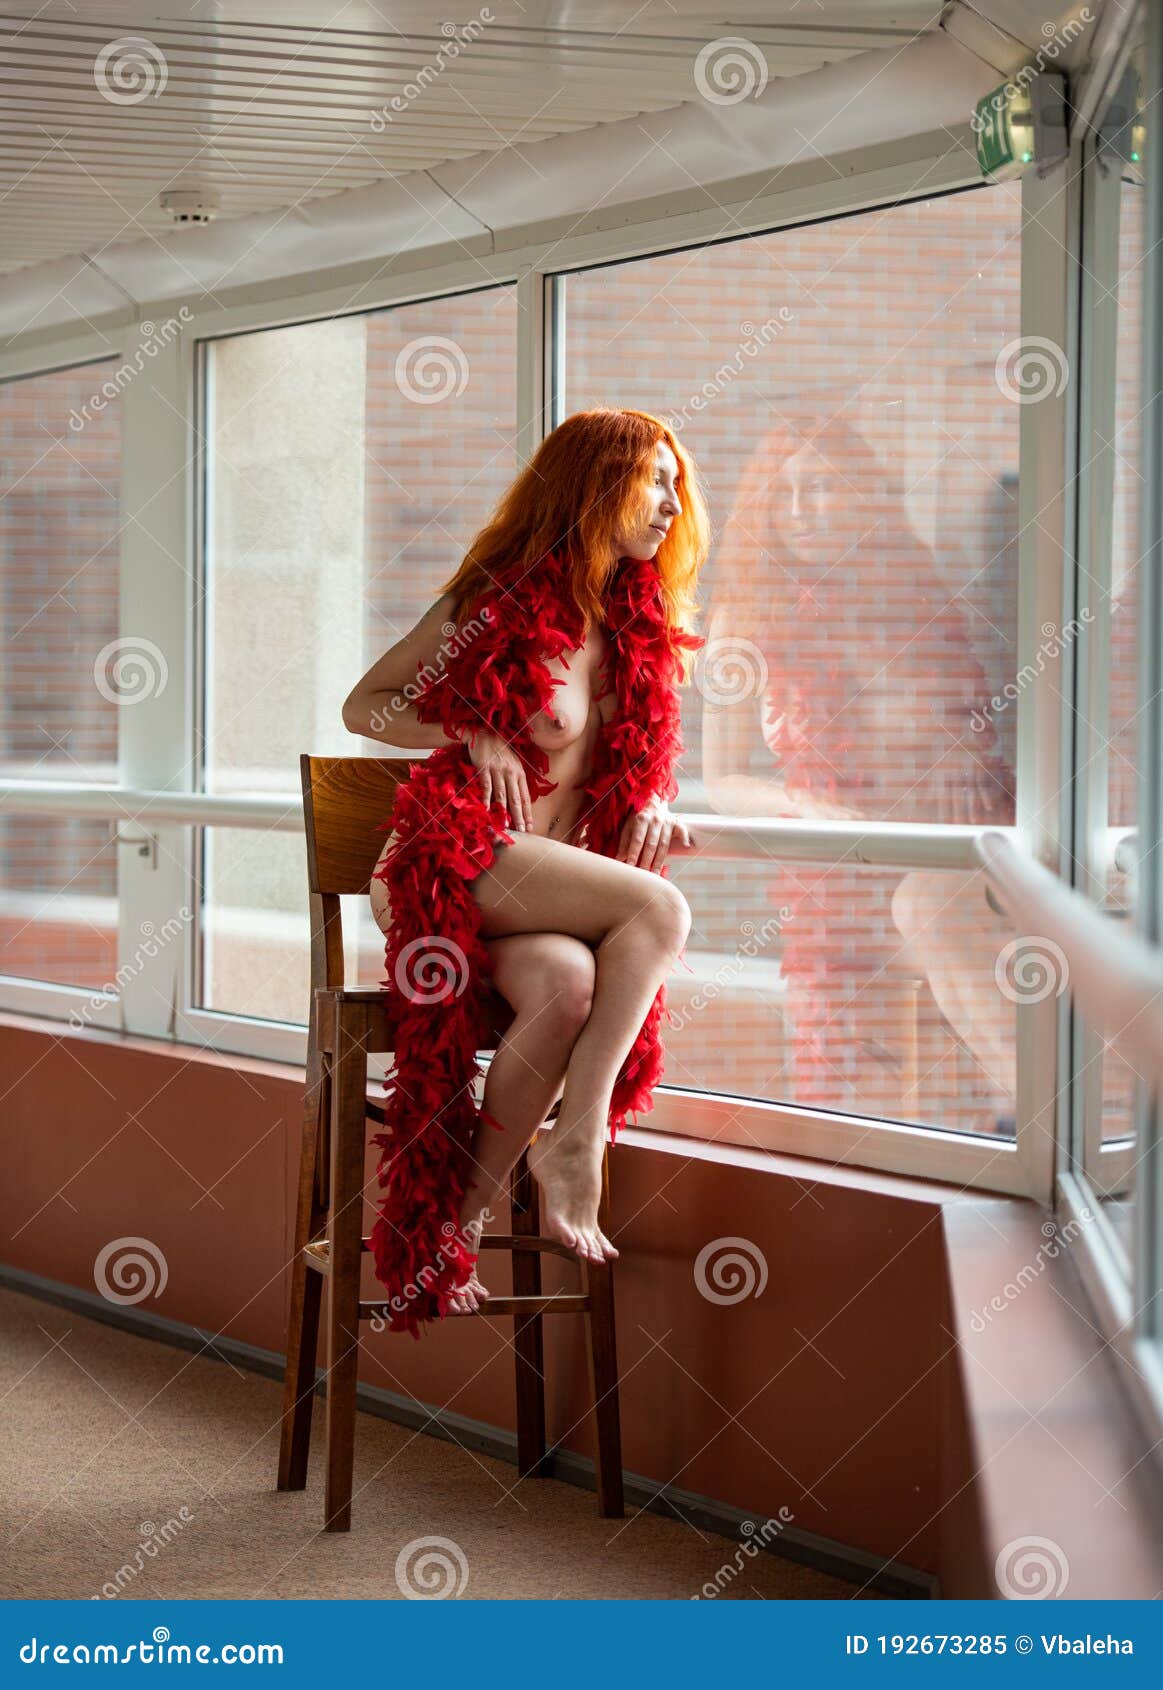 Hot Redhead Naked Female Sitting